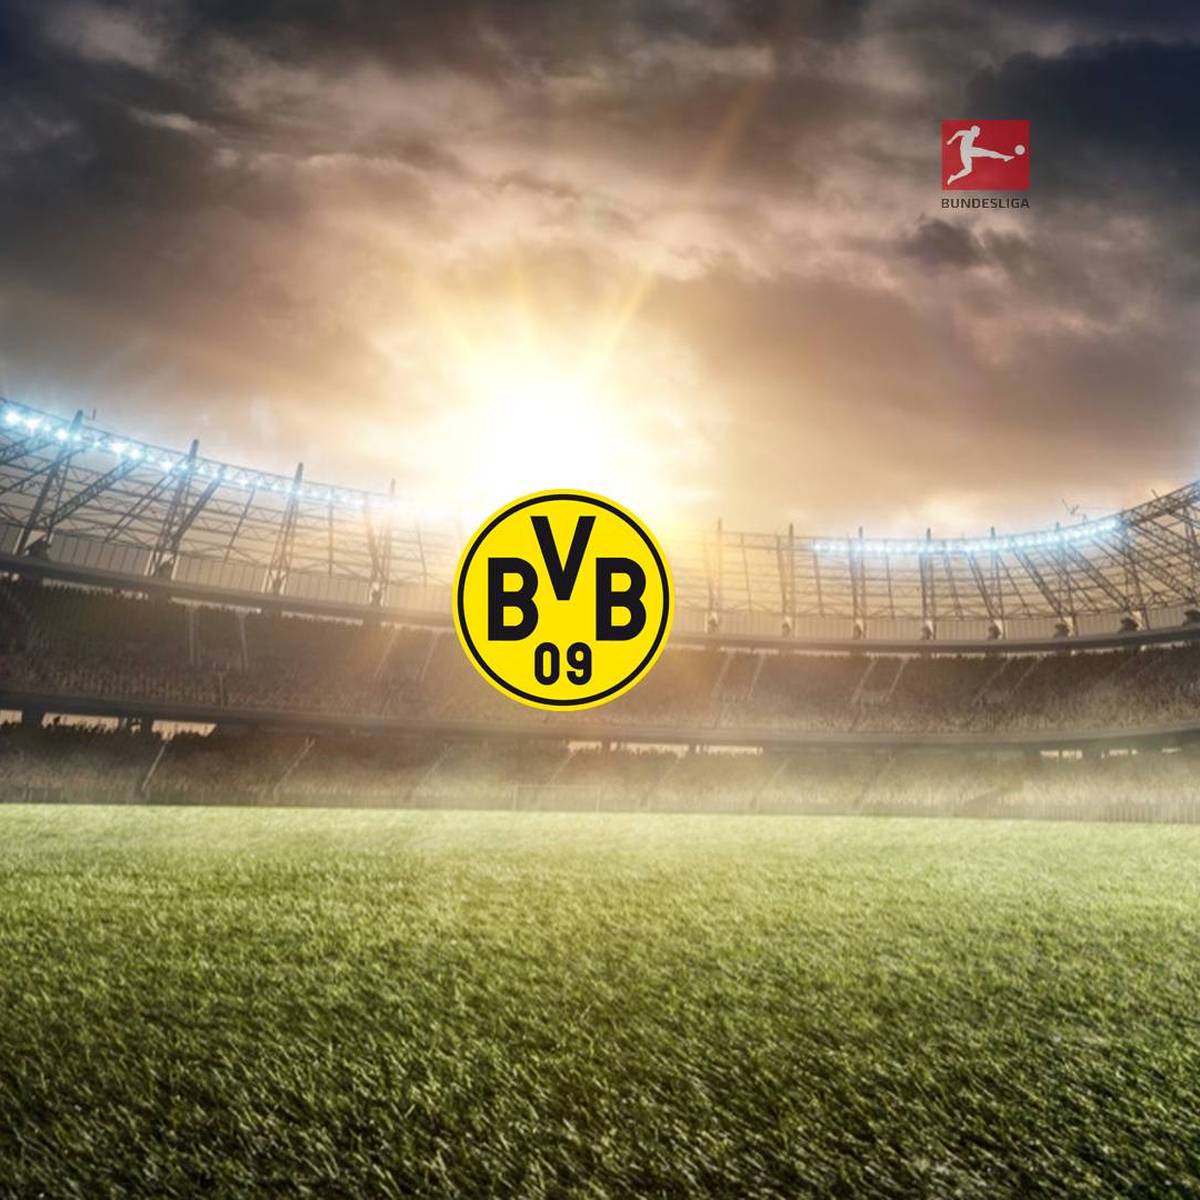 Bundesliga: Borussia Dortmund – SV Werder Bremen (Samstag, 15:30 Uhr)